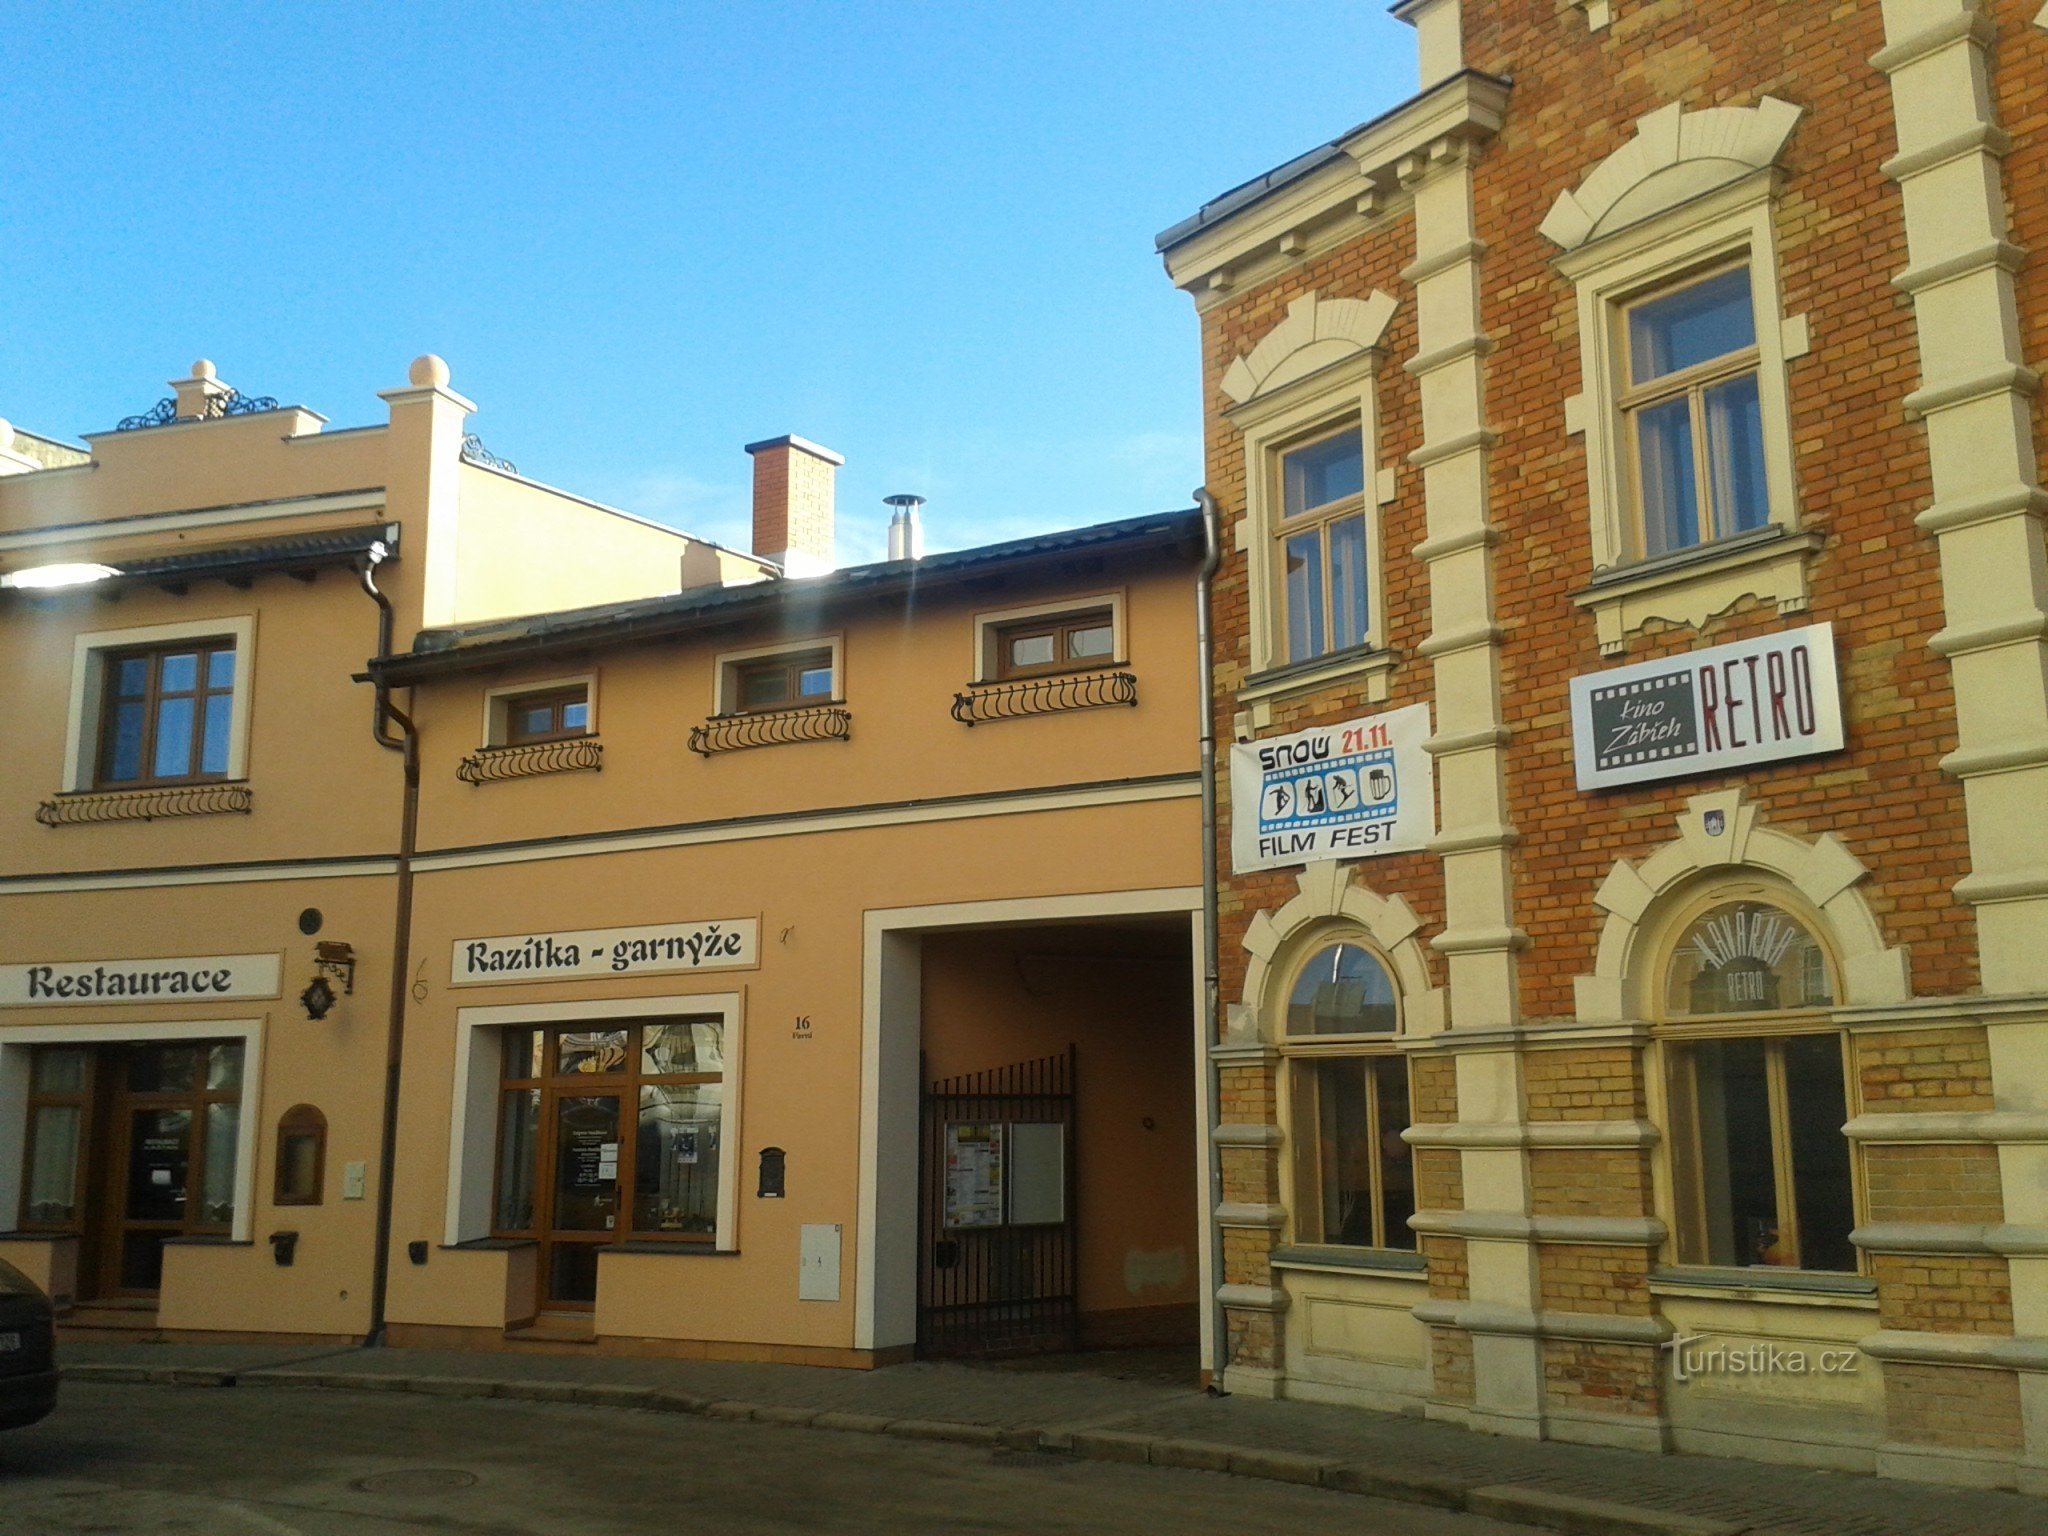 Zábřeh - Retro bioscoopgebouw met café